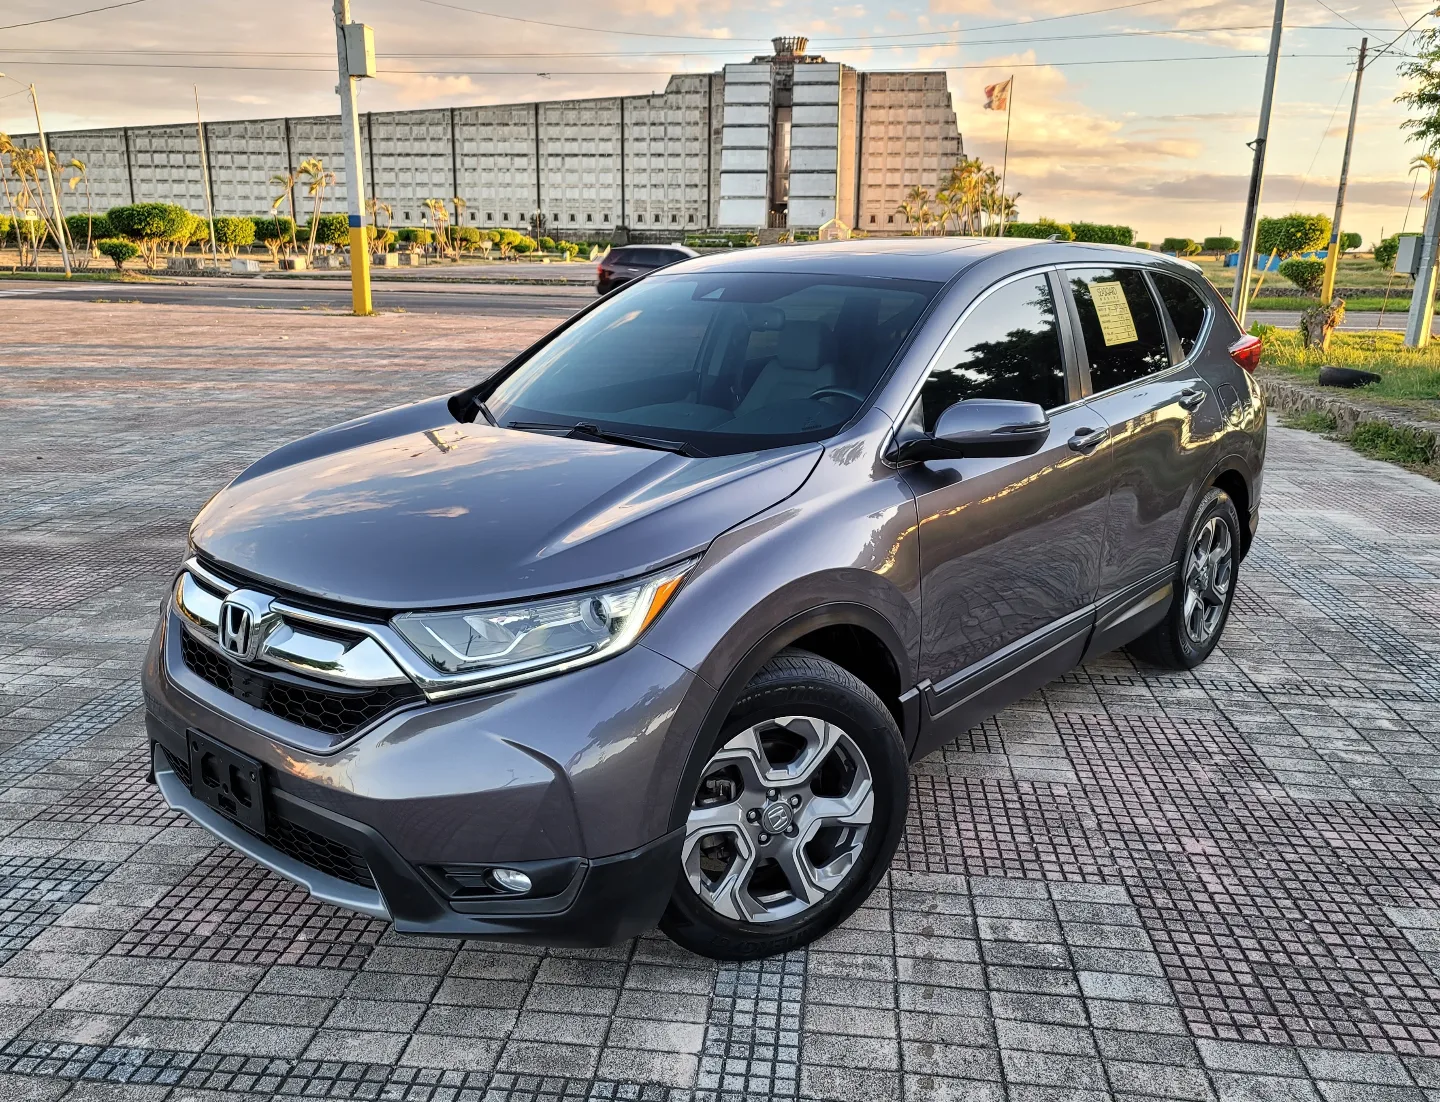 Honda CRV 2018 full EX-L  Foto 7143422-1.jpg